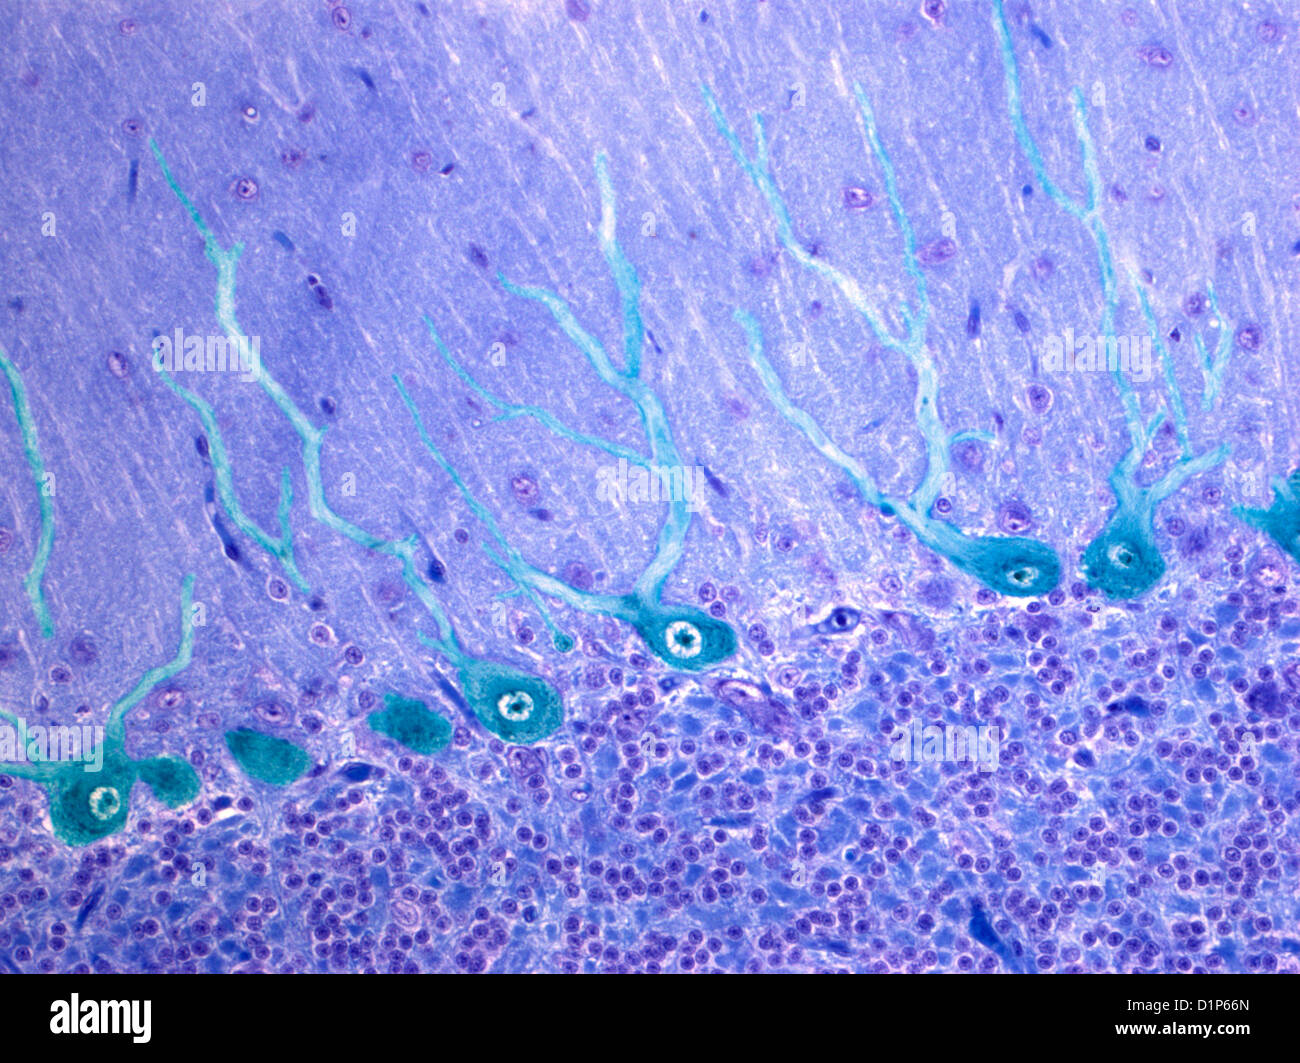 Nerve cells, light micrograph Stock Photo